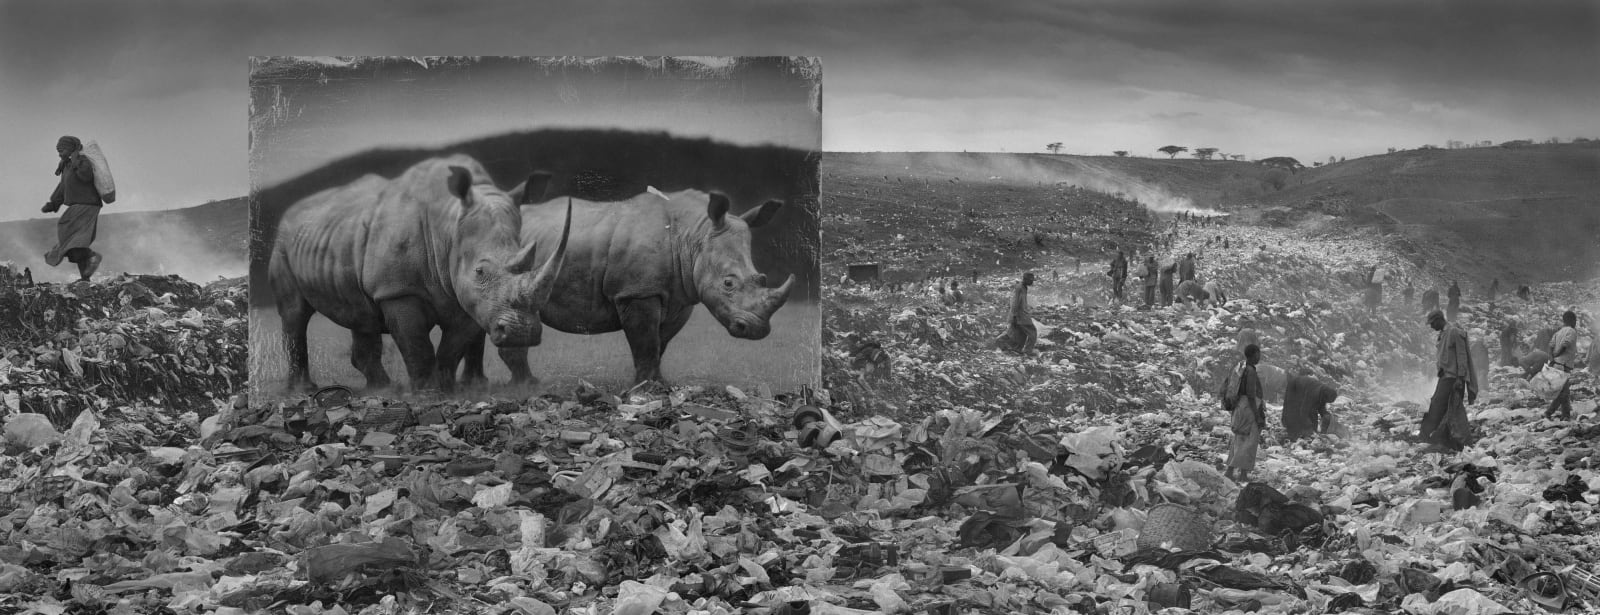 Nick Brandt, Wasteland with Rhinos, 2015